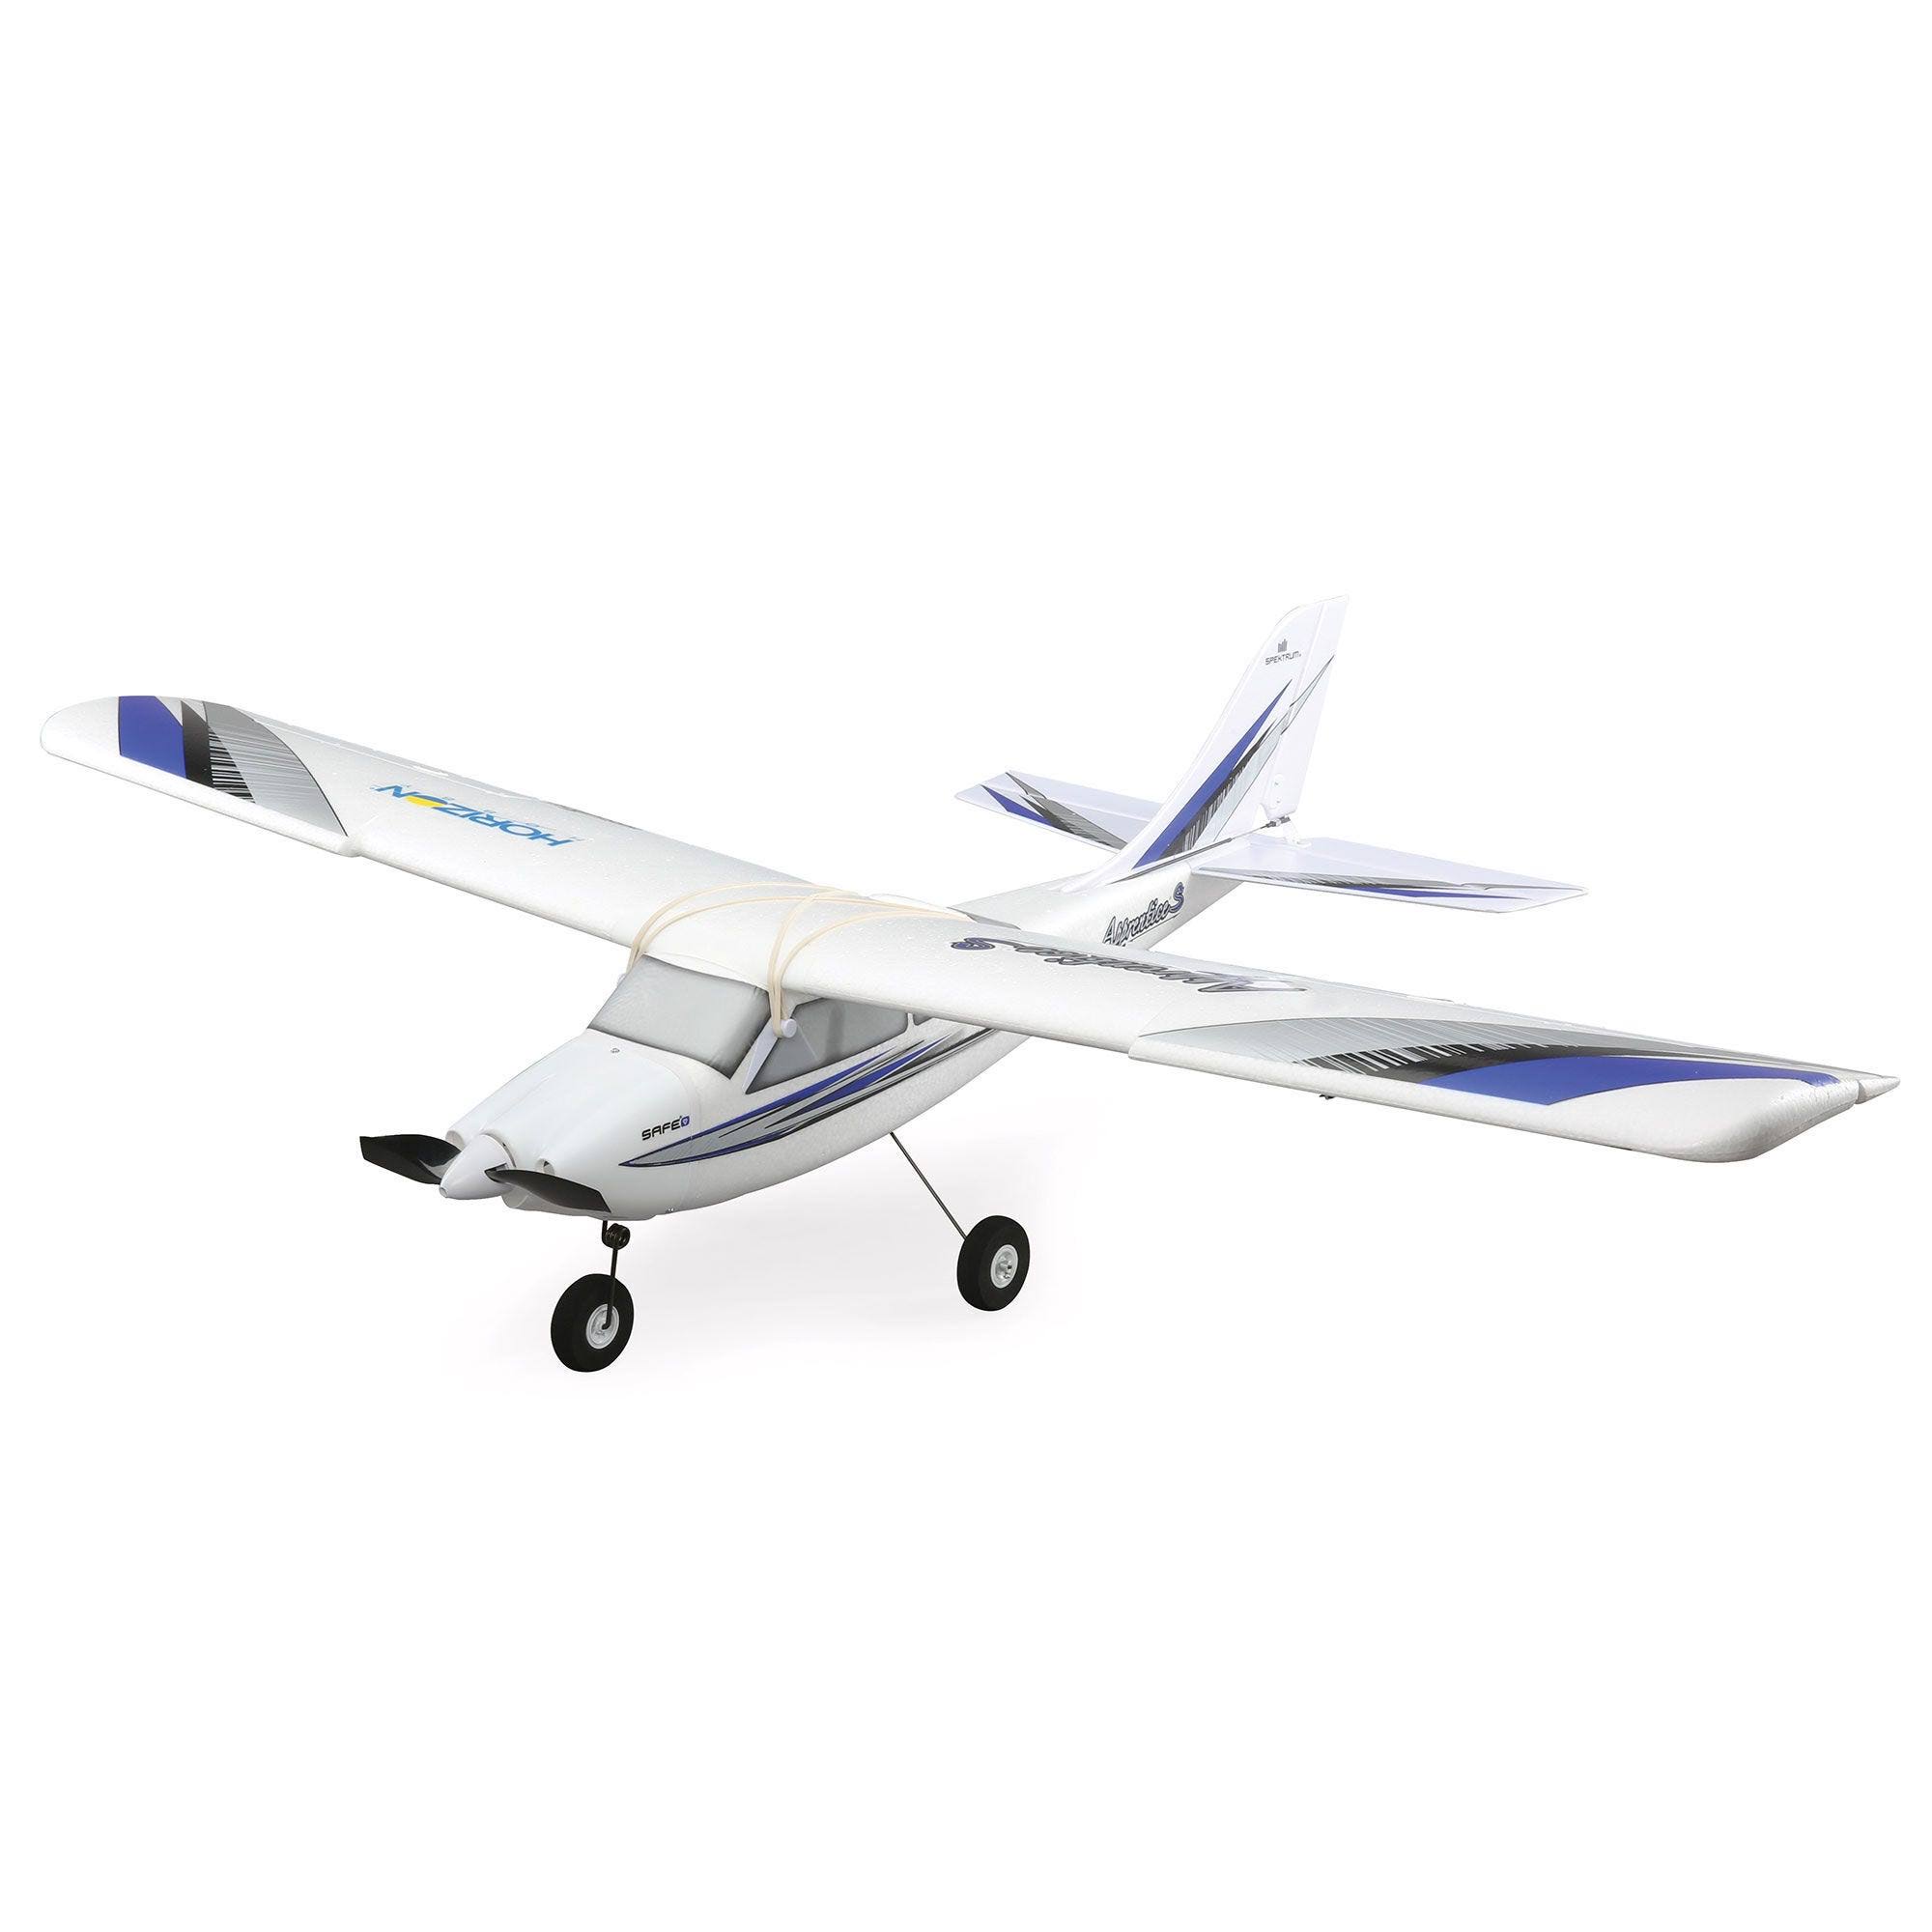 Hobbyzone Apprentice S 2 1.2m RC Plane, BNF Basic, HBZ31500 Trainer RC Plane